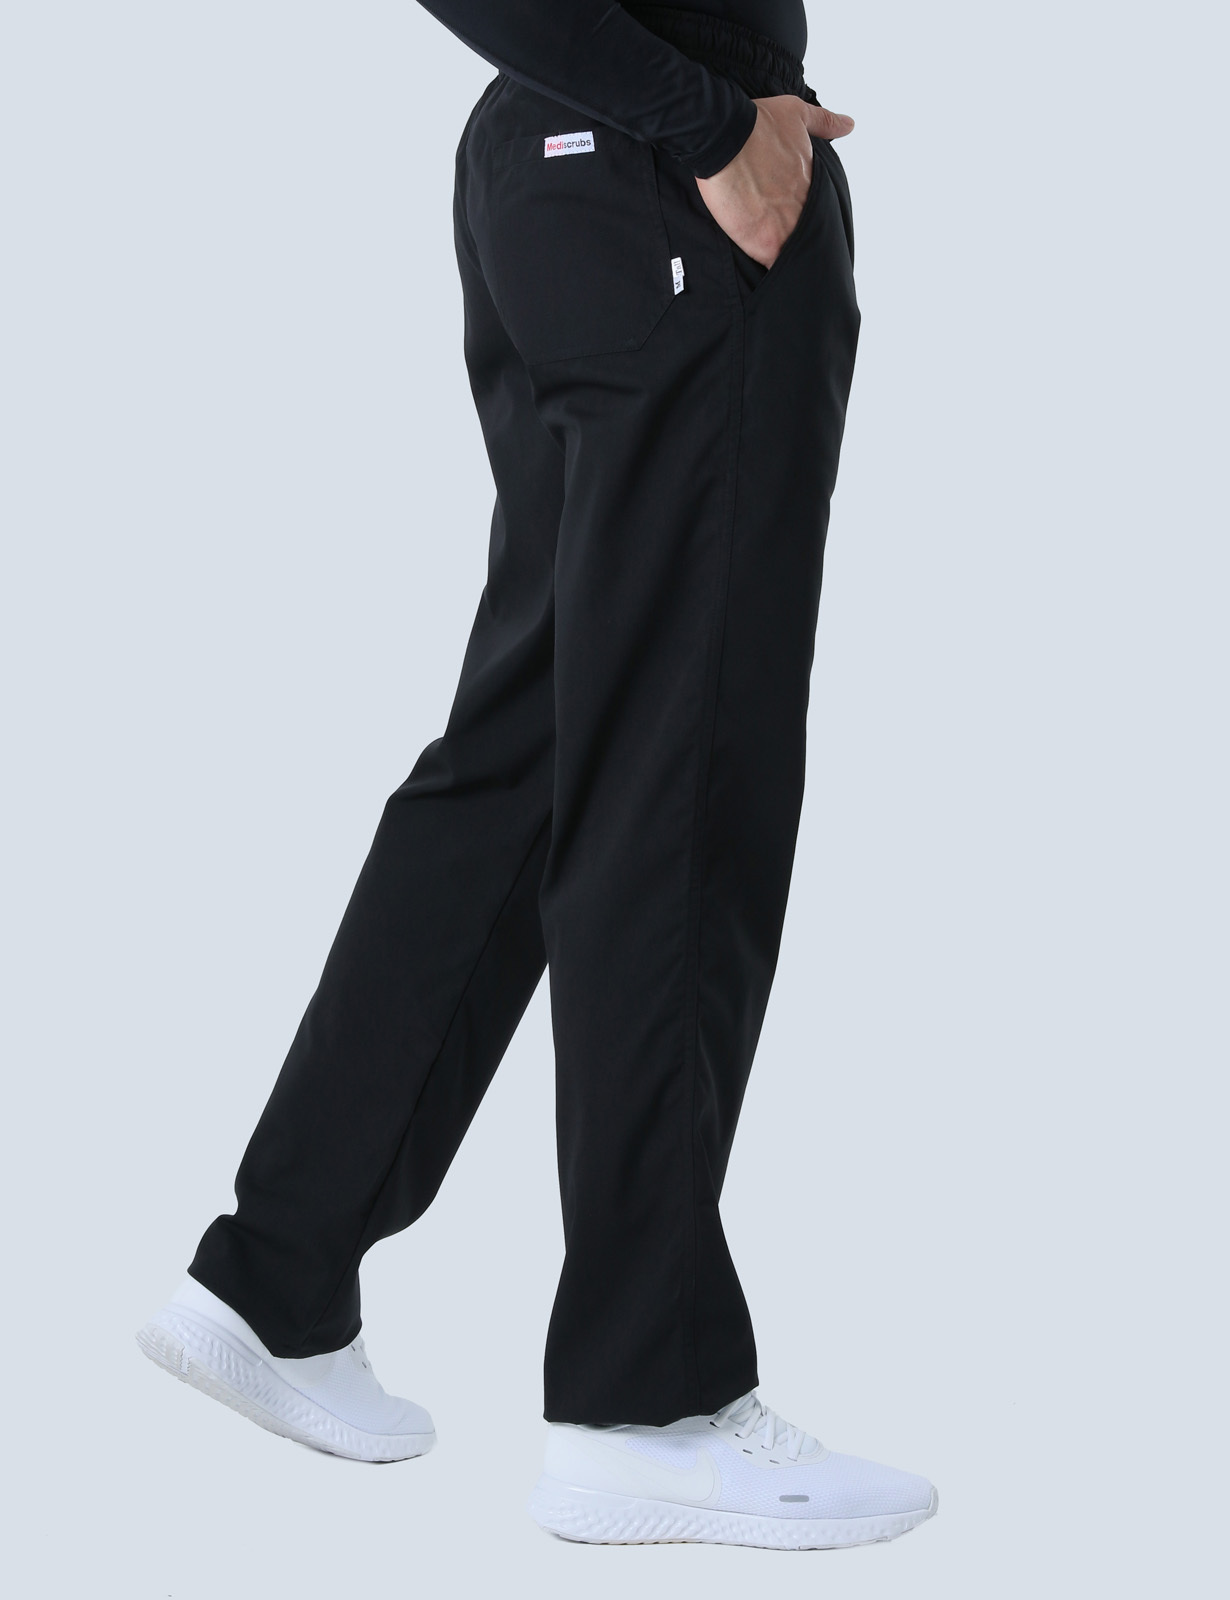 Men's Regular Cut Pants - Black - X Small